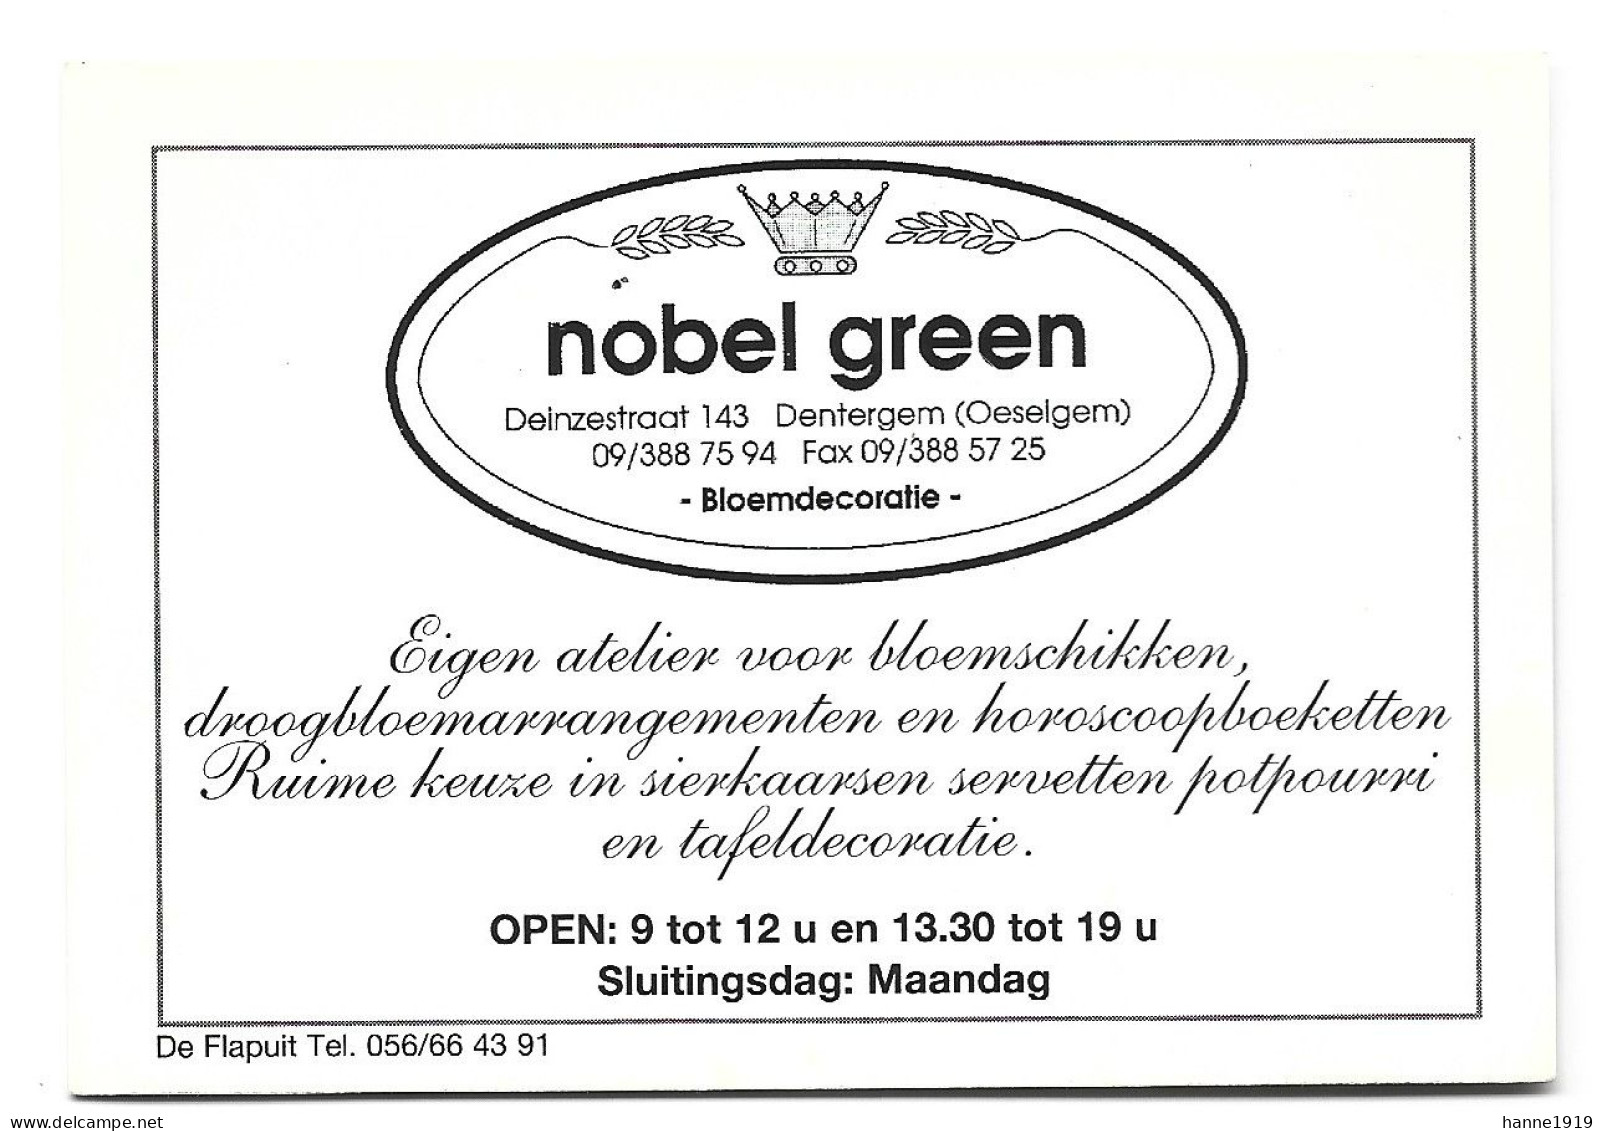 Dentergem Oeselgem Deinzestraat Atelier Nobel Green Etiquette Visitekaartje Htje - Visiting Cards